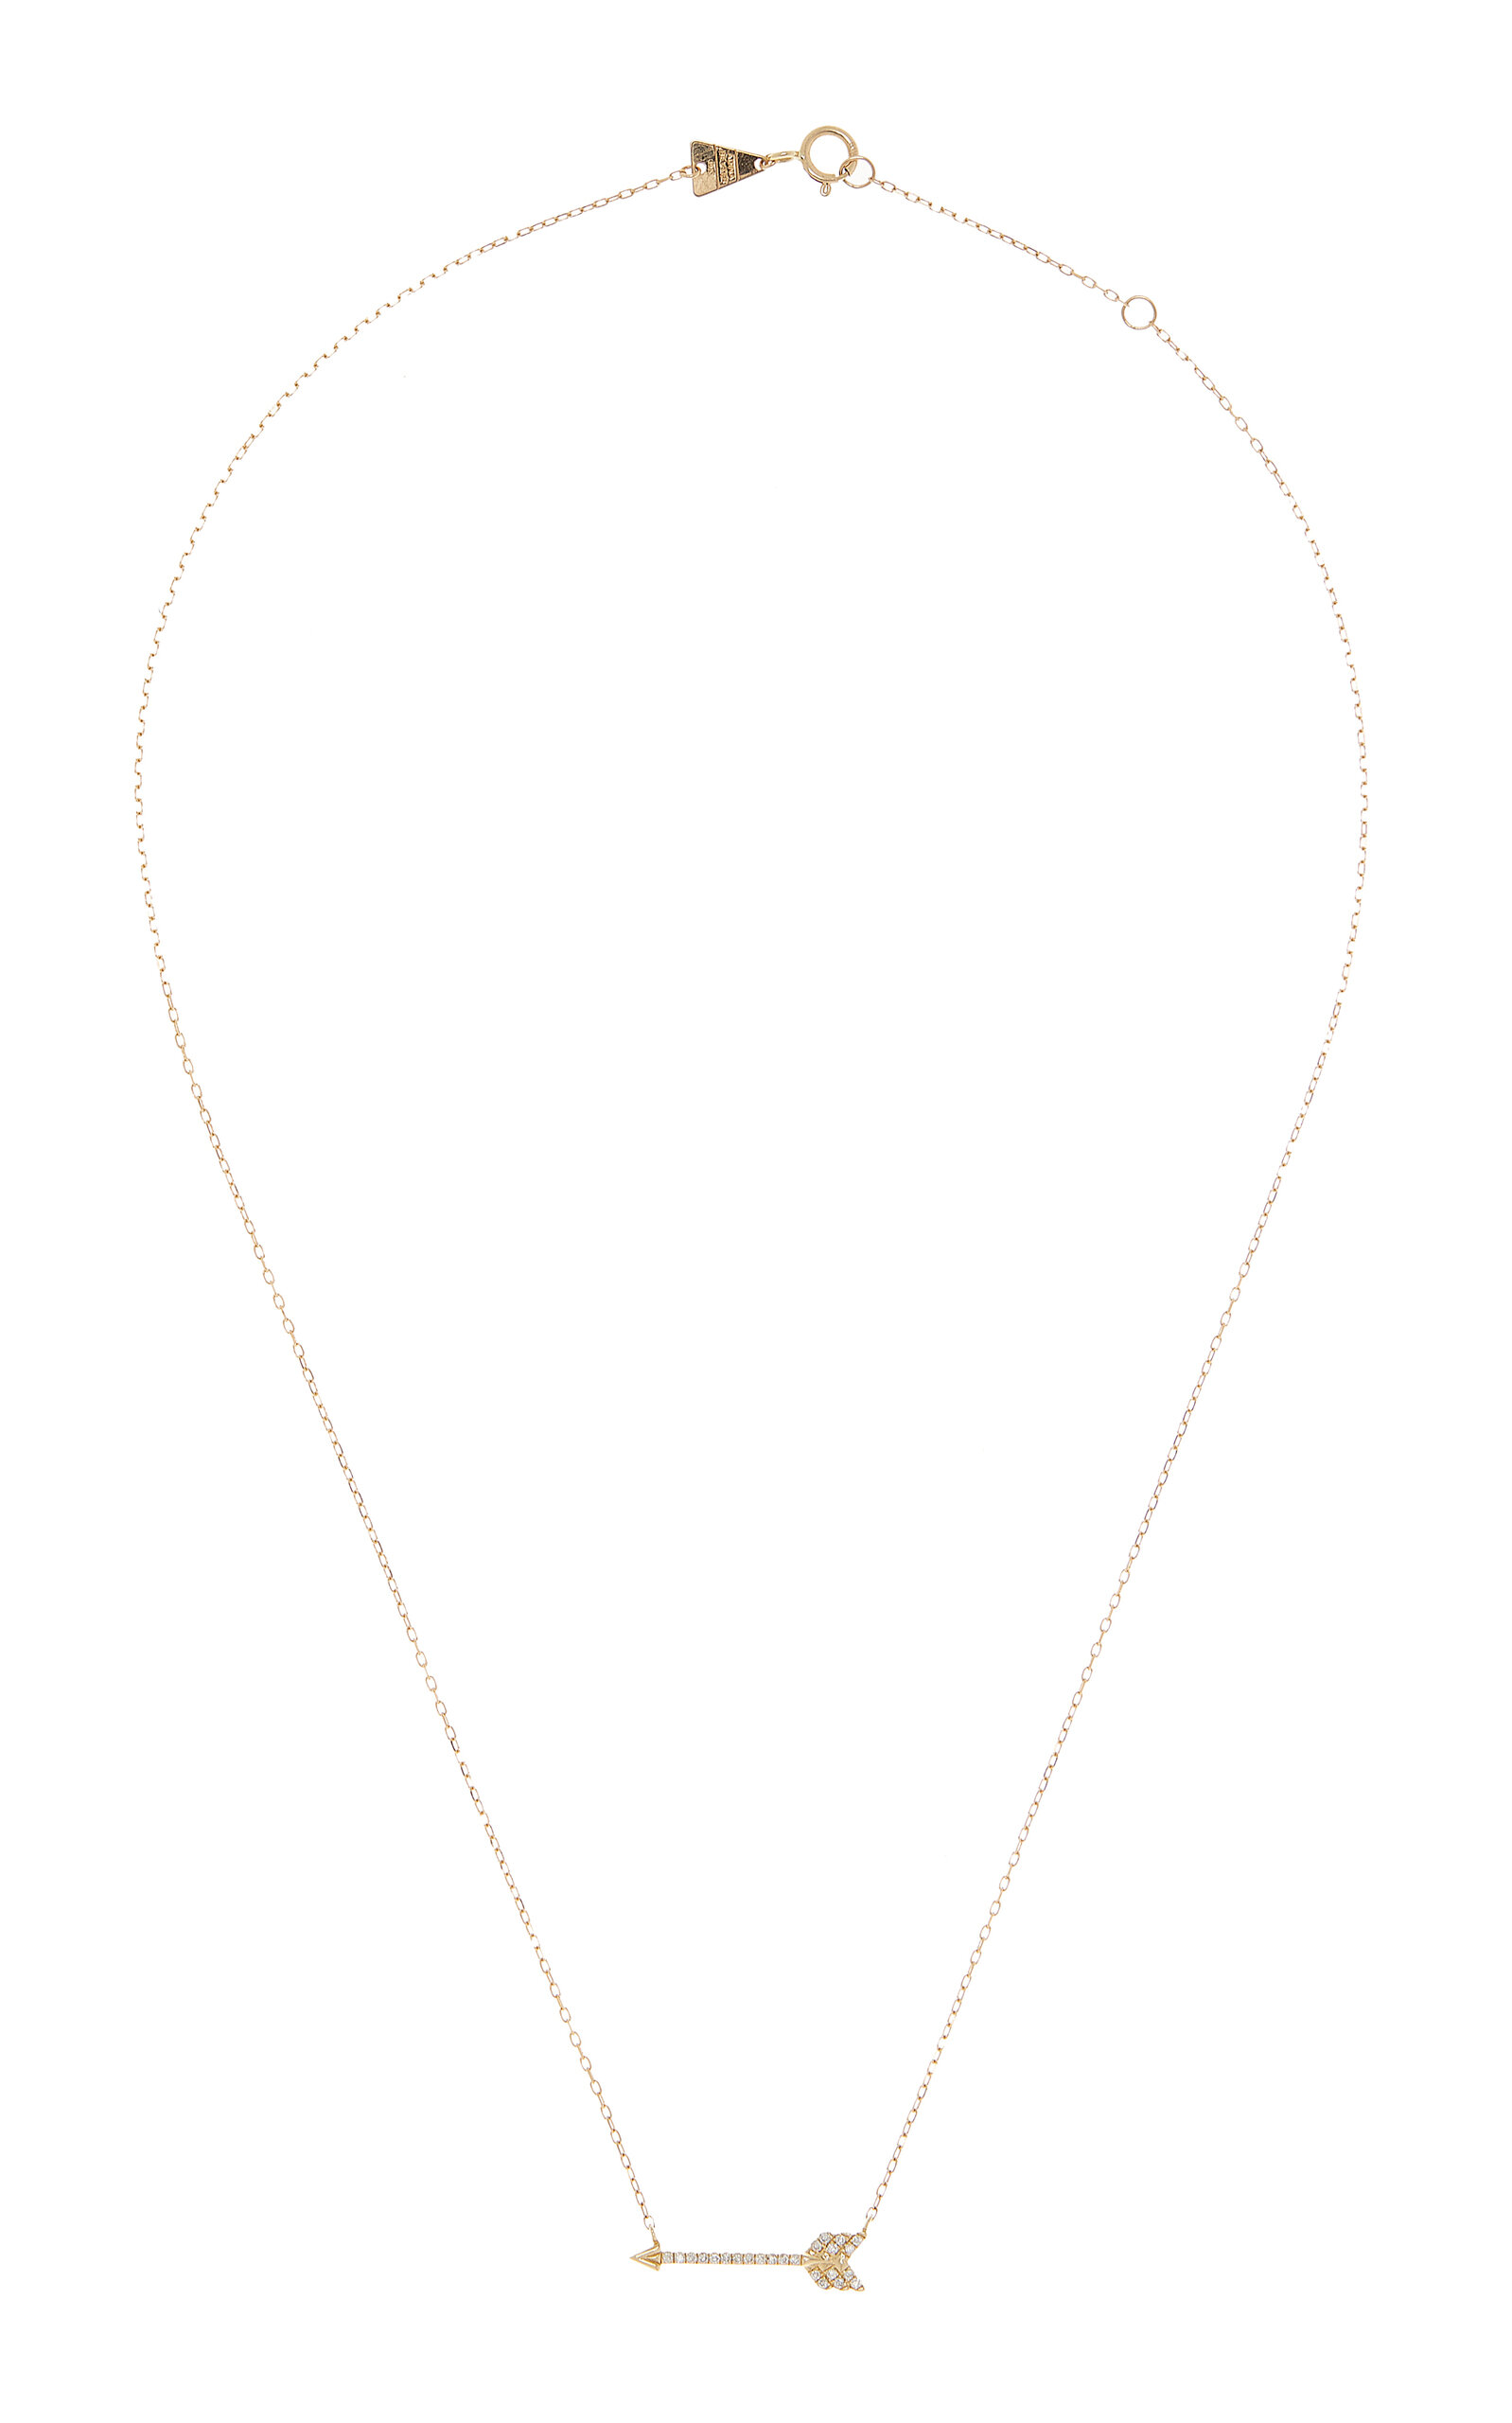 Adina Reyter 14k Yellow Gold Pave Diamond Arrow Pendant Necklace, 15